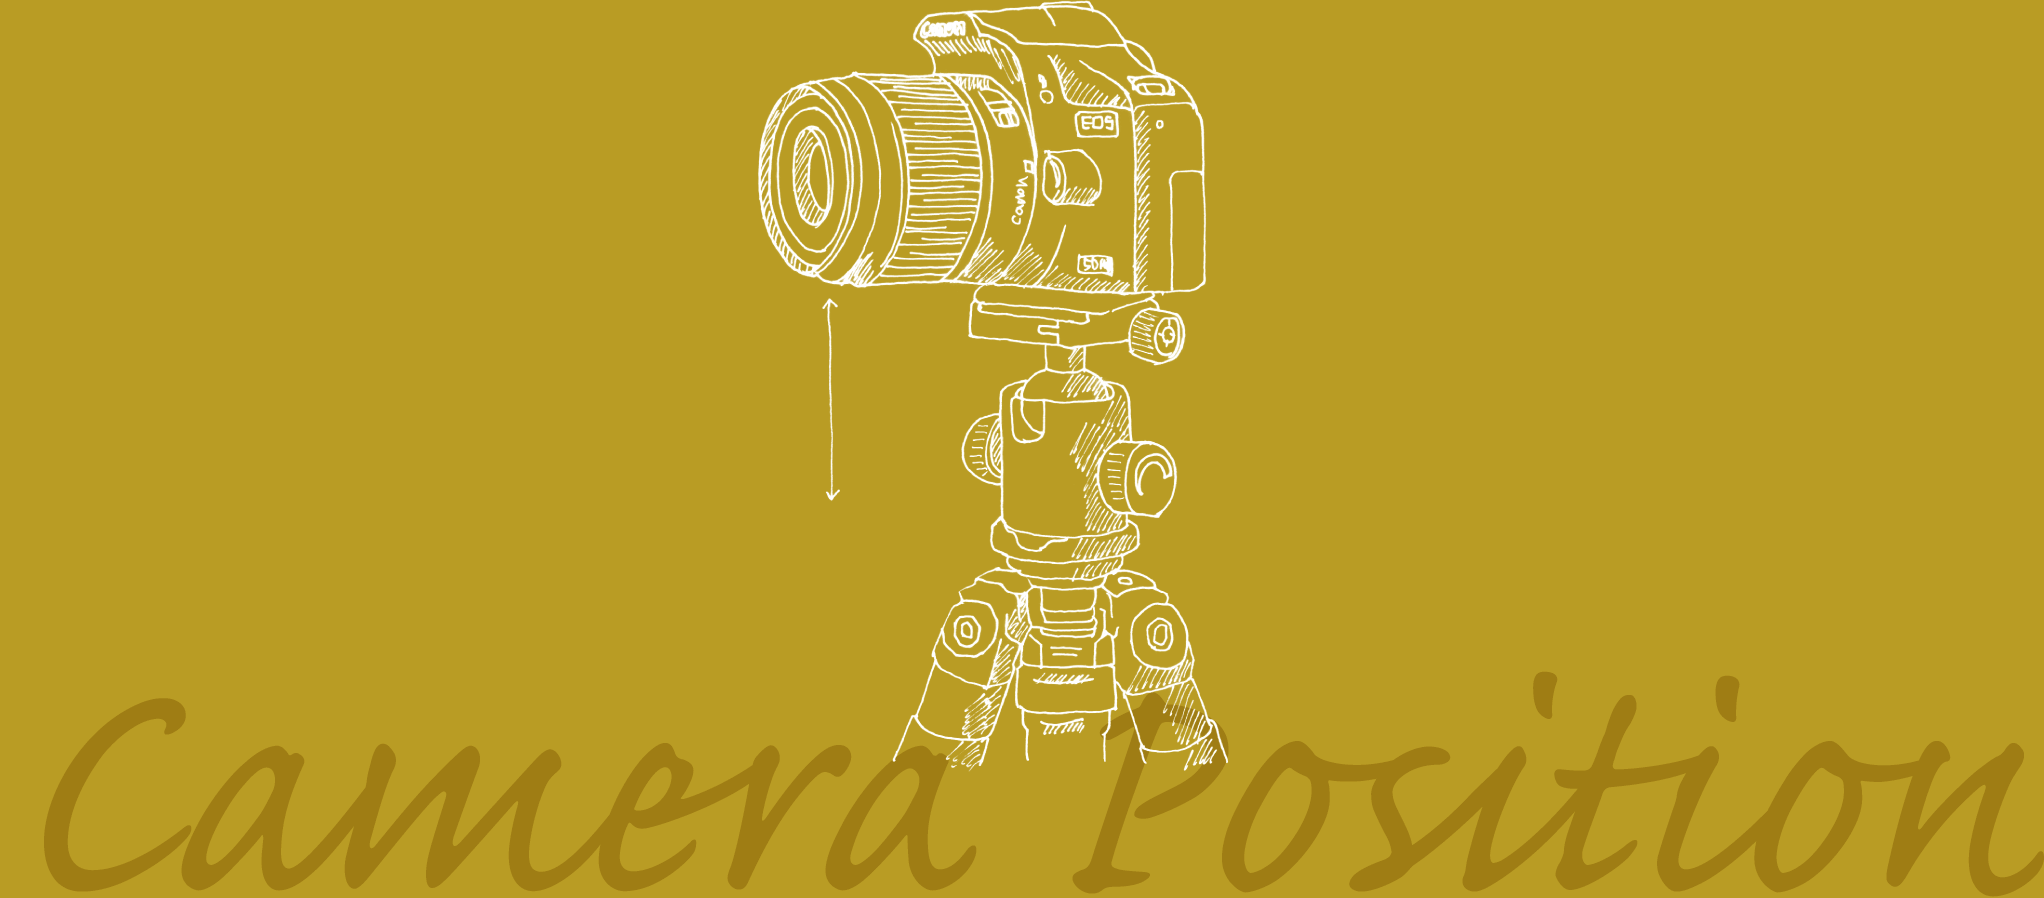 Camera Position